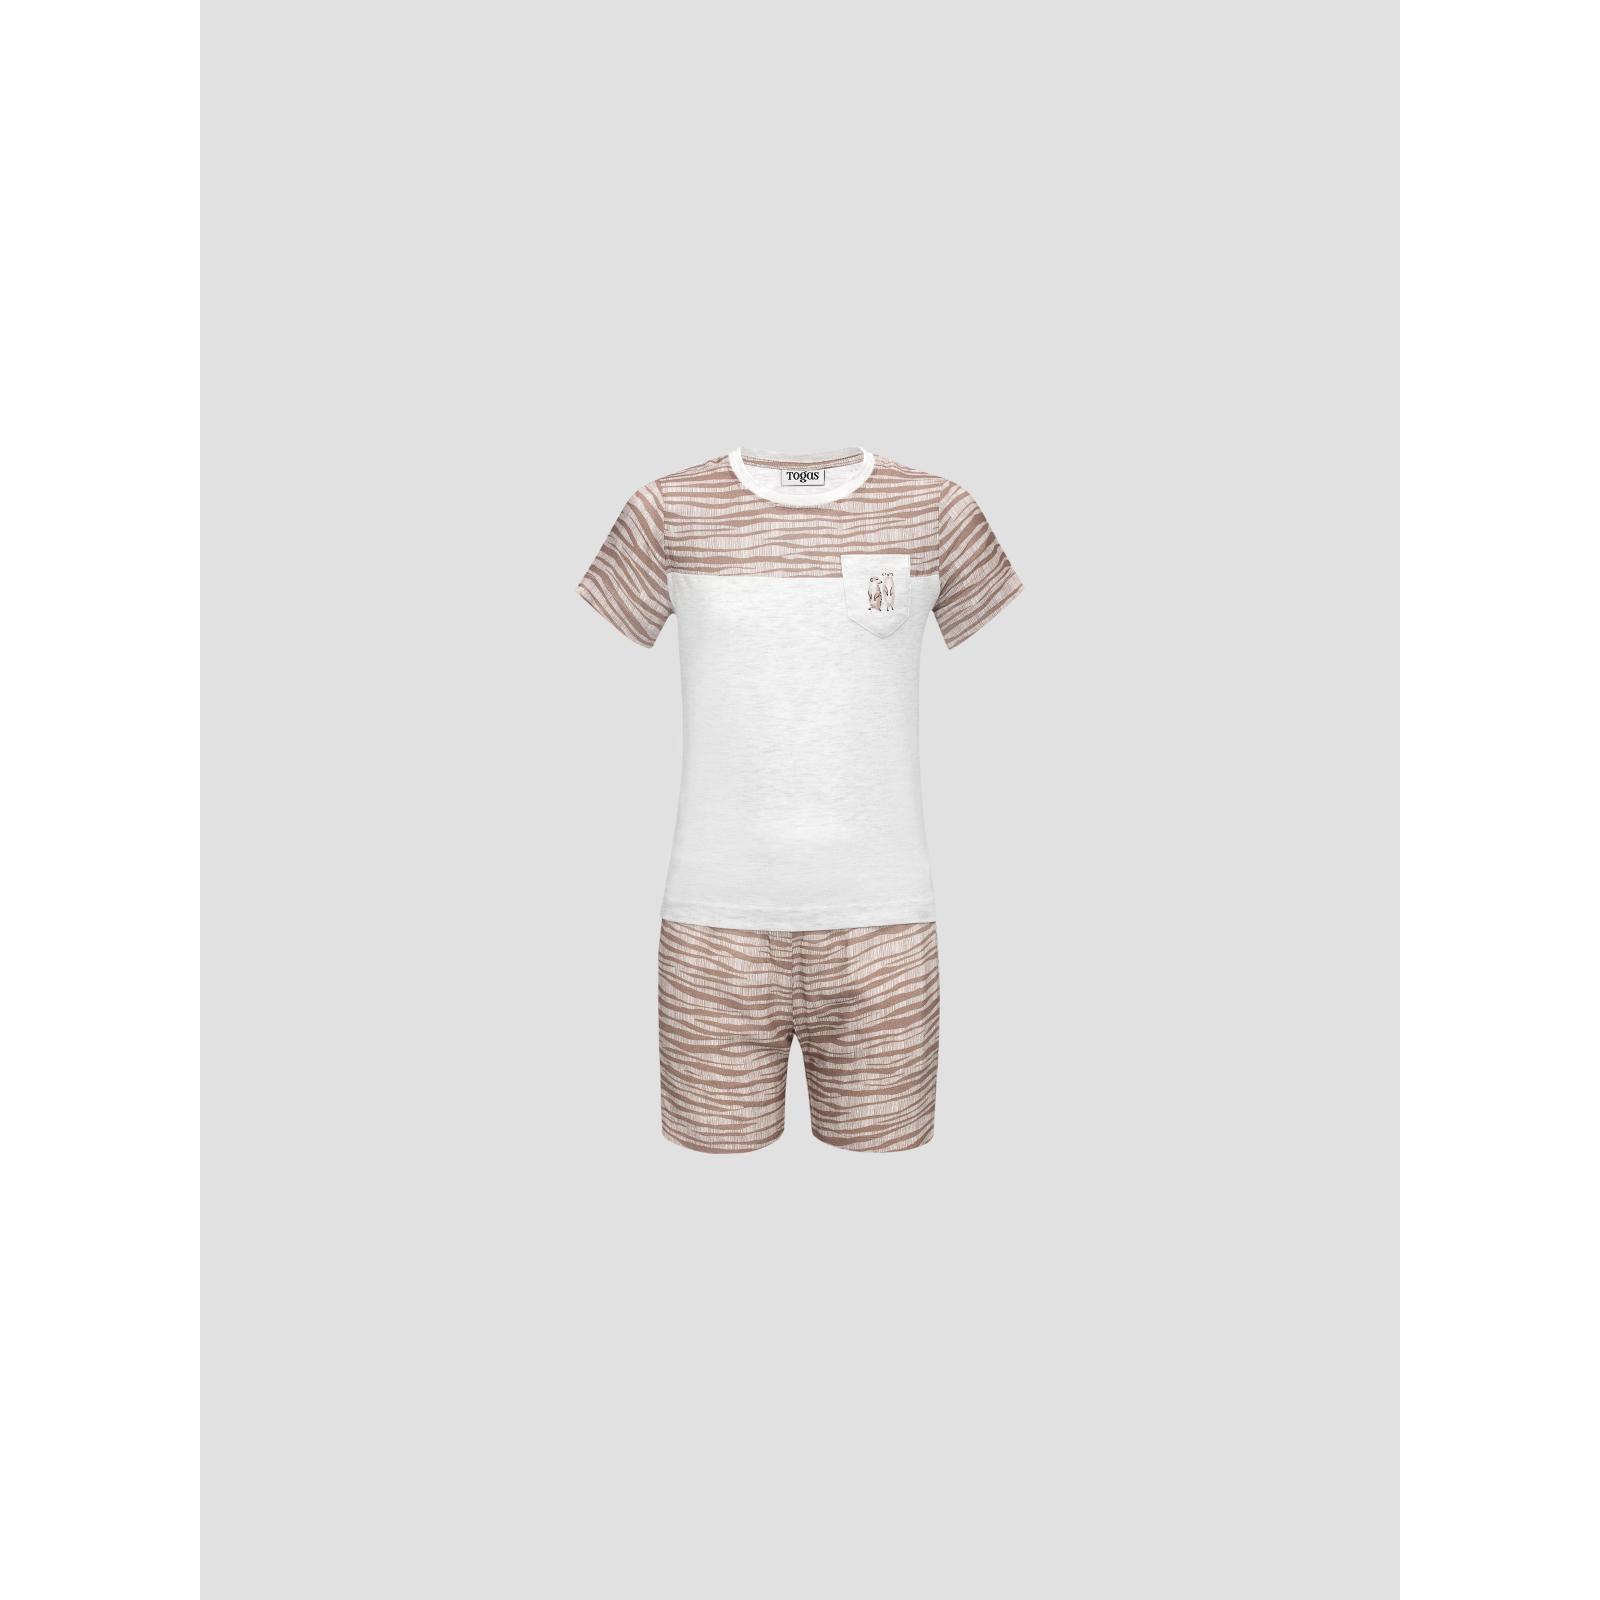 Пижама для мальчиков Kids by togas Сафари бежевый 128-134 см пижама сорочка шорты